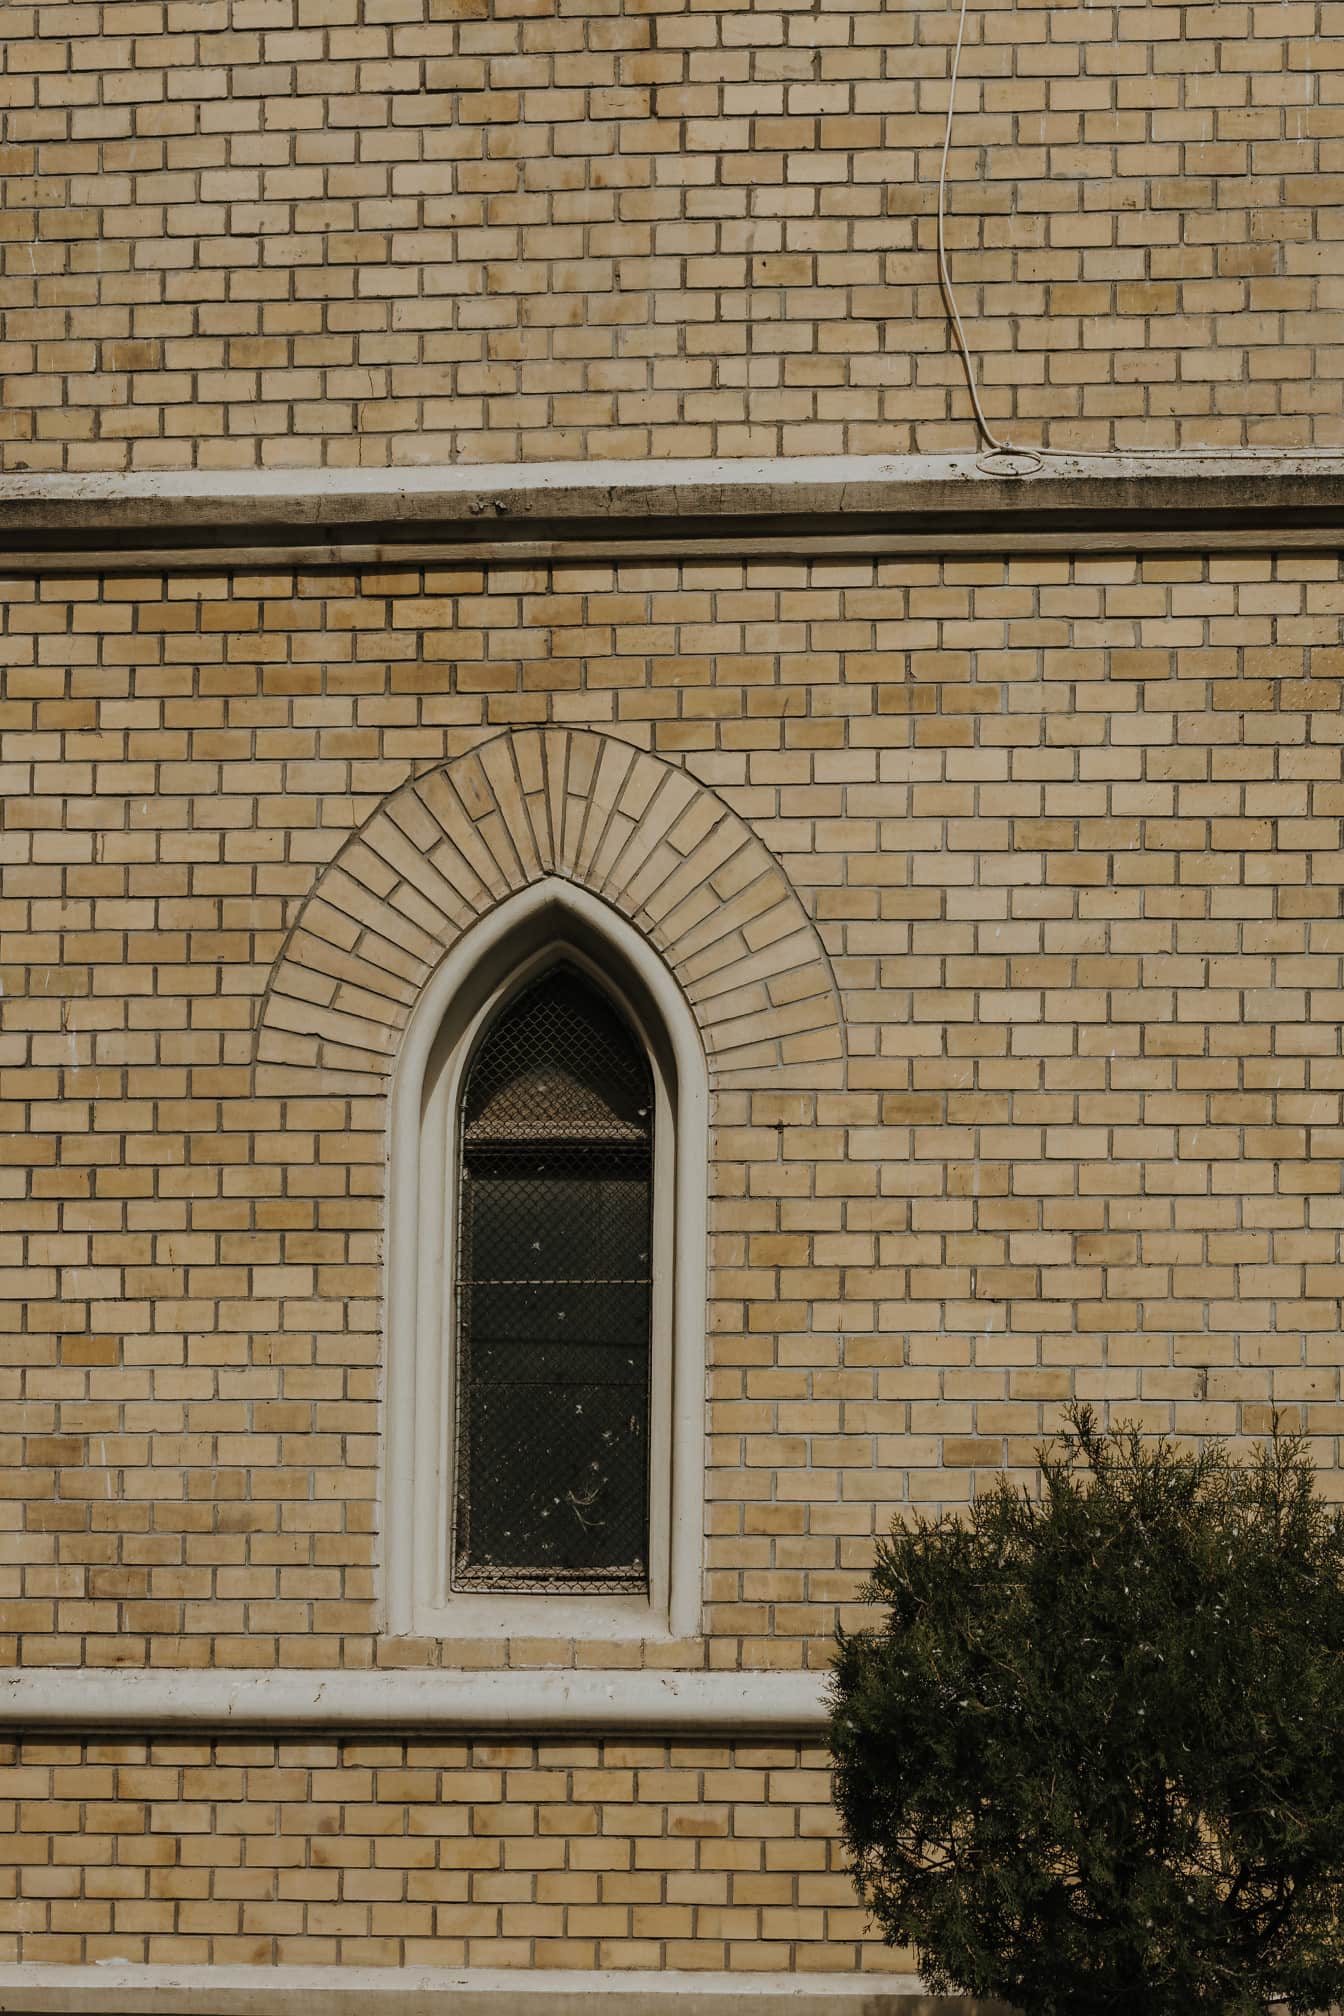 Klein gotisch venster met boog op bakstenen muur